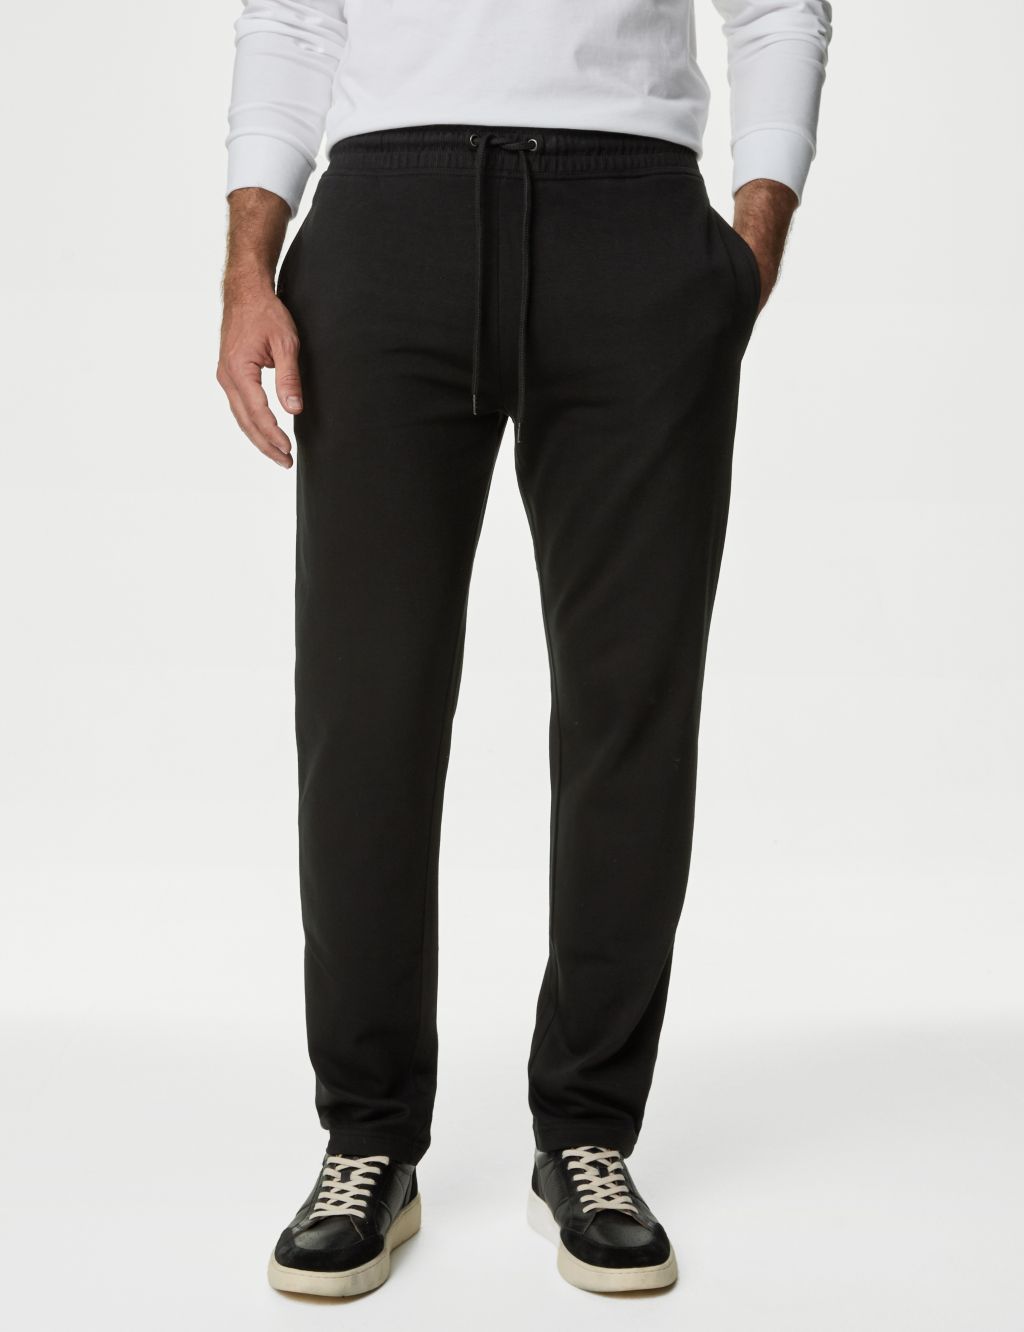 Mens Unisex Straight Leg Sweatsuit Set, Streetwear, Black